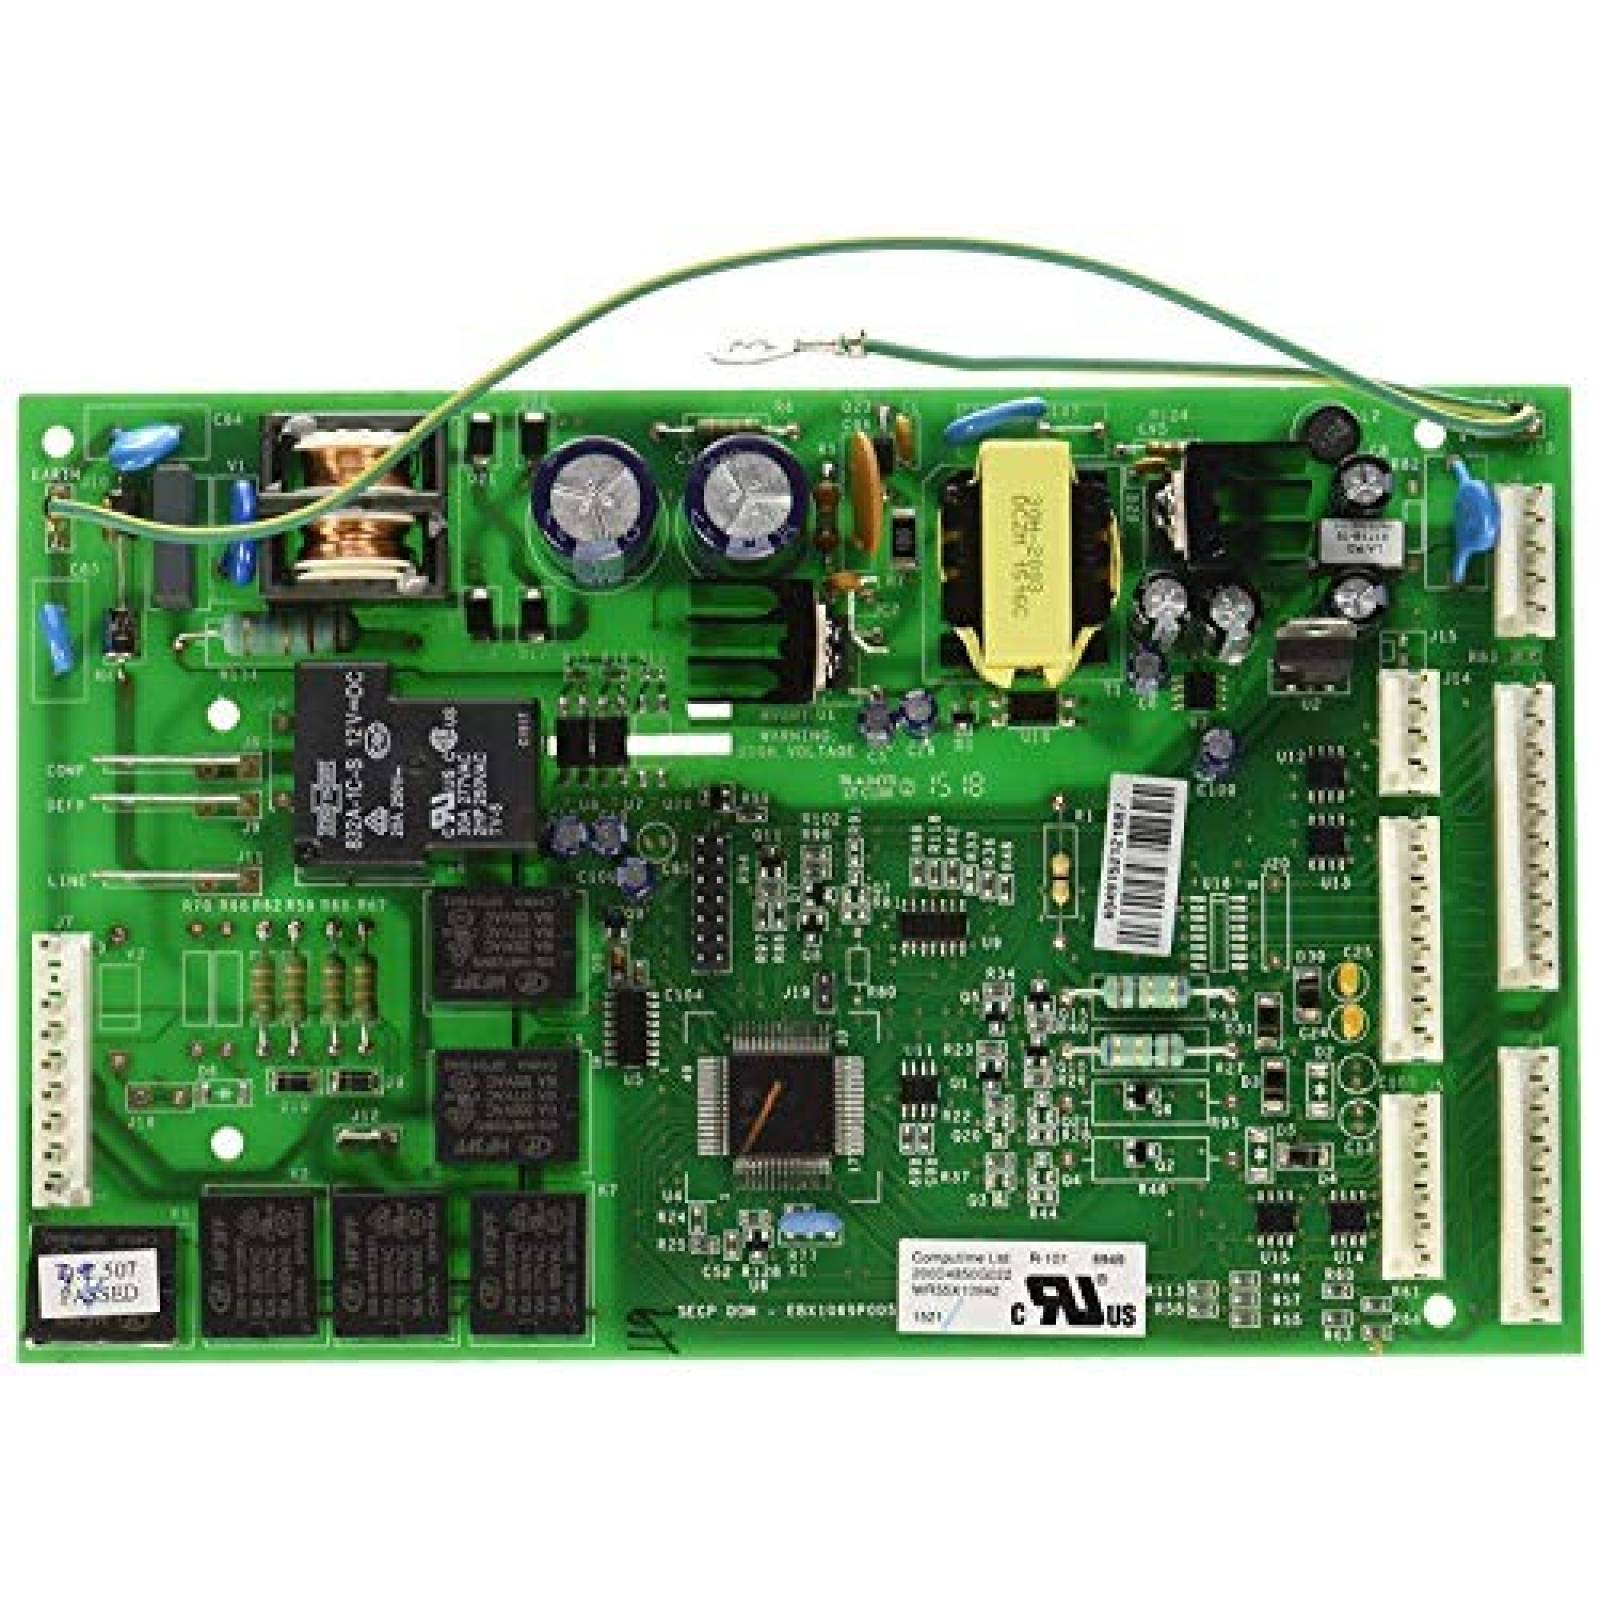 Placa base PRIMECO para placa de control refrigerador GE